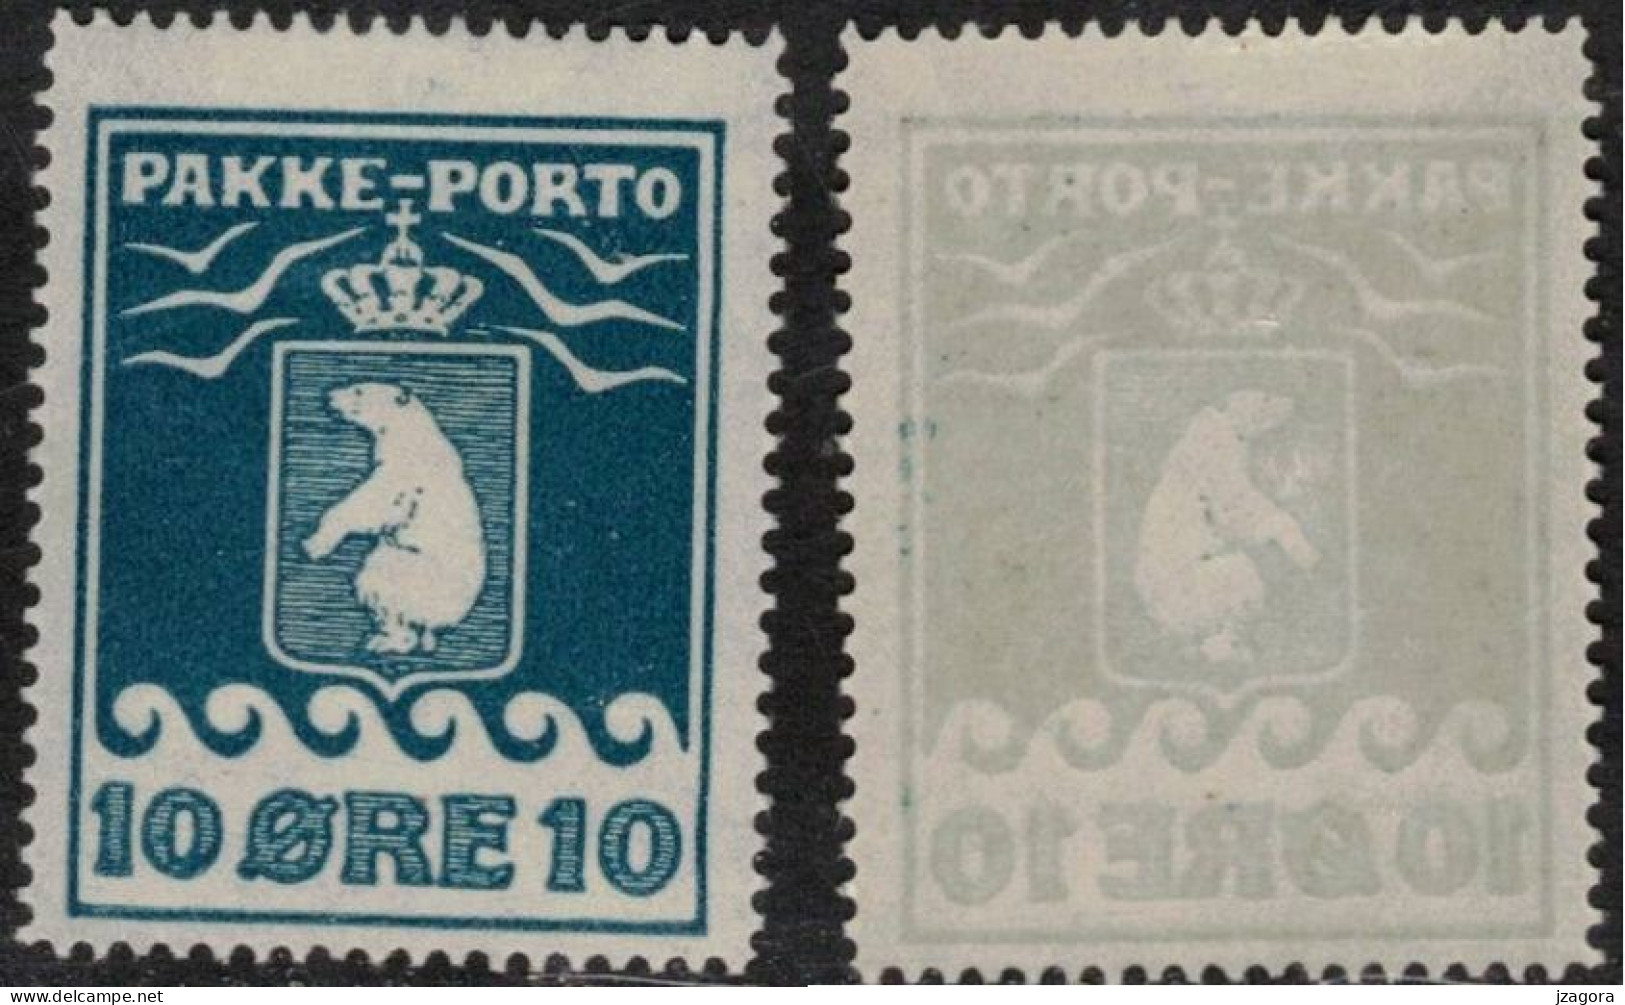 GRÖNLAND GROENLAND GREENLAND 1915 PAKKE PORTO PARCEL POST 10 ÖRE Perf 11 ½ MI 7A FACIT P7 II - MINT NEVER HINGED (**) - Paquetes Postales